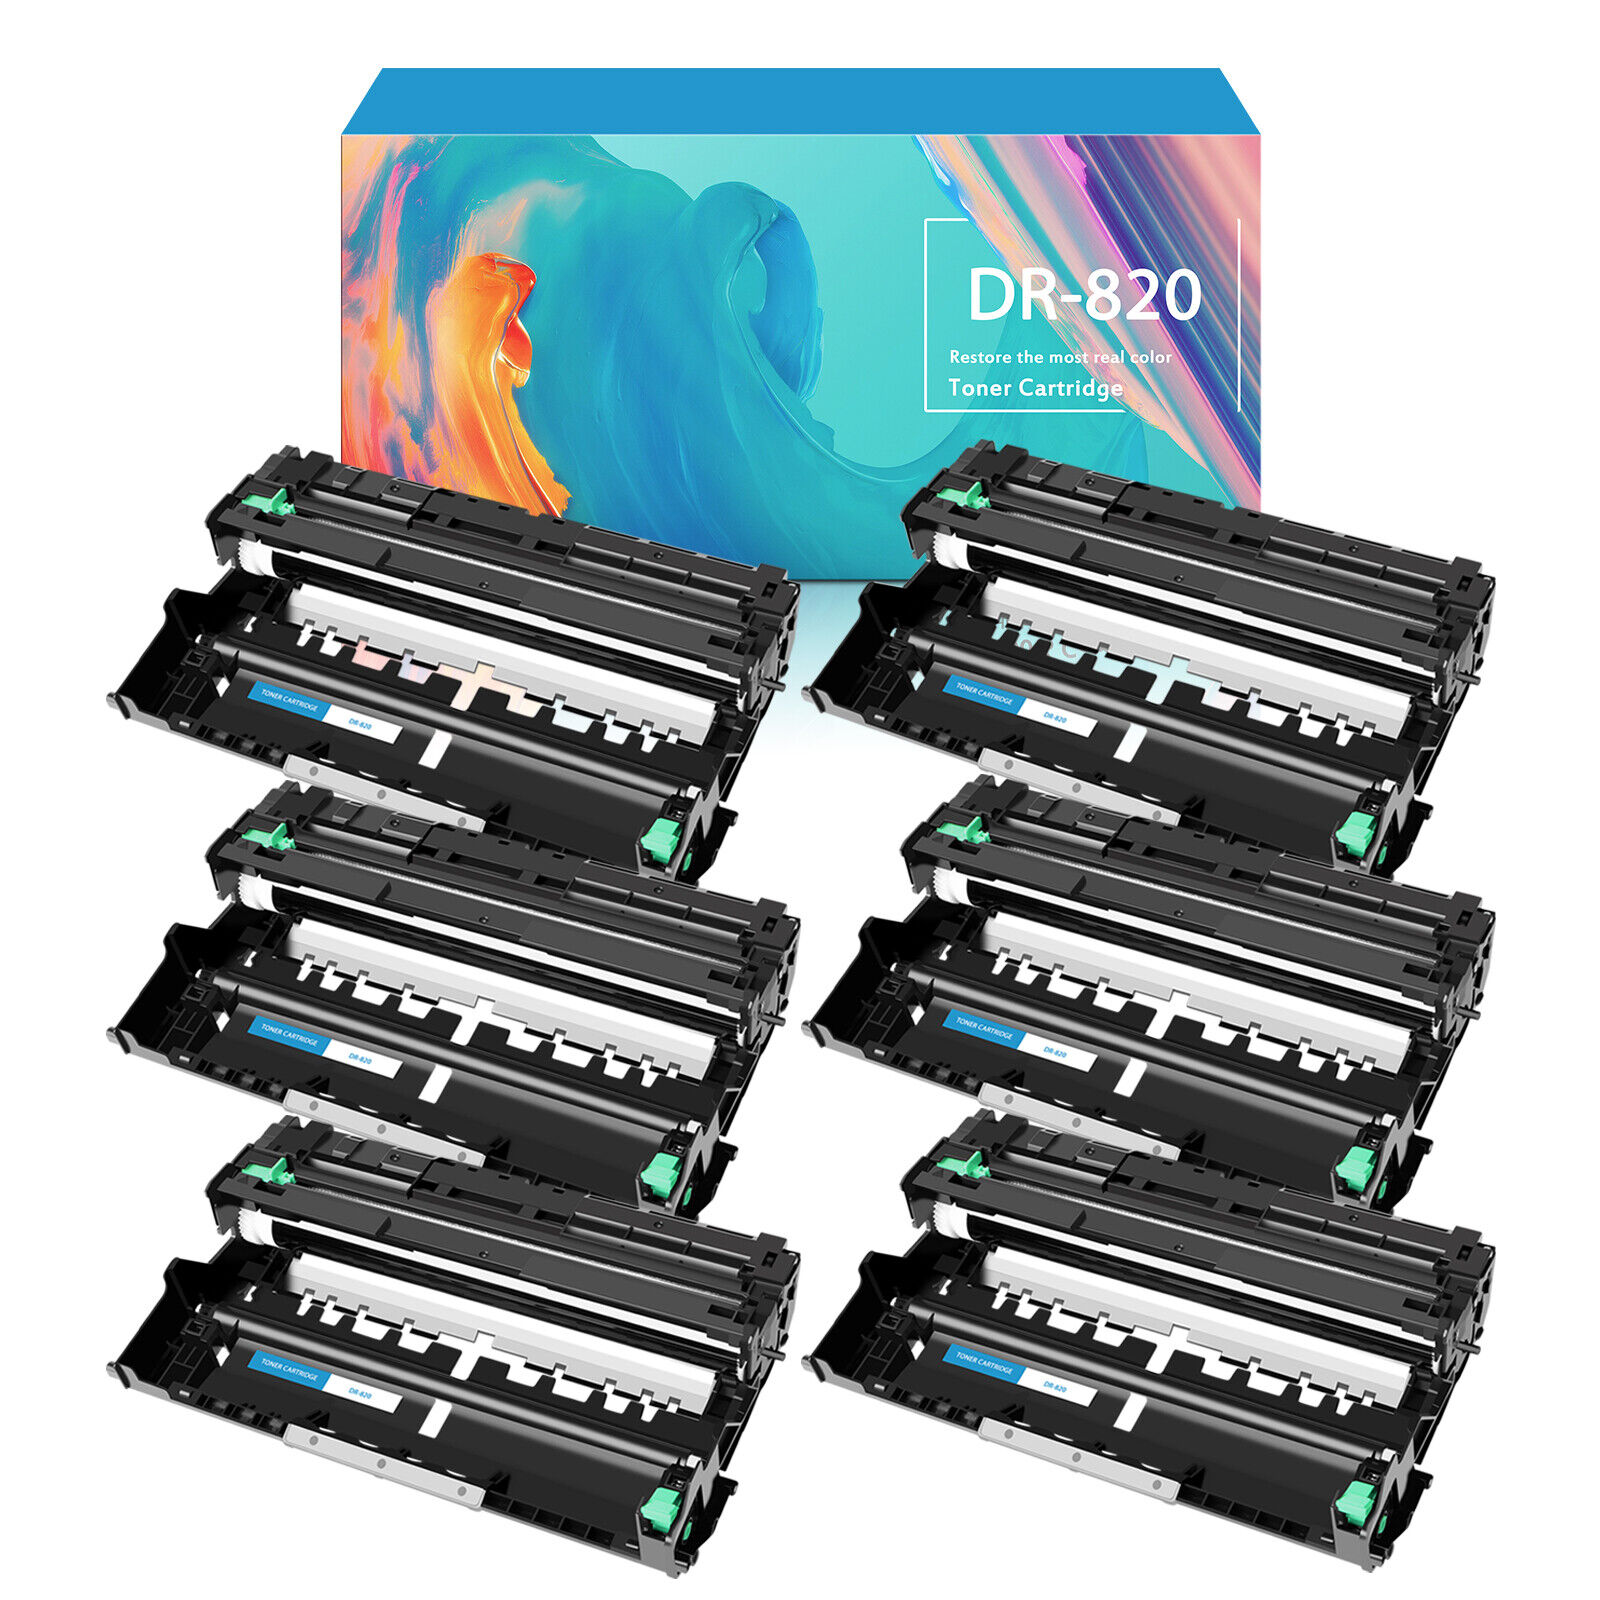 6 Pack Drum for Brother DR-820 DR820 MFC-L6750DW MFC-L6800DW MFC-L6900DW Printer